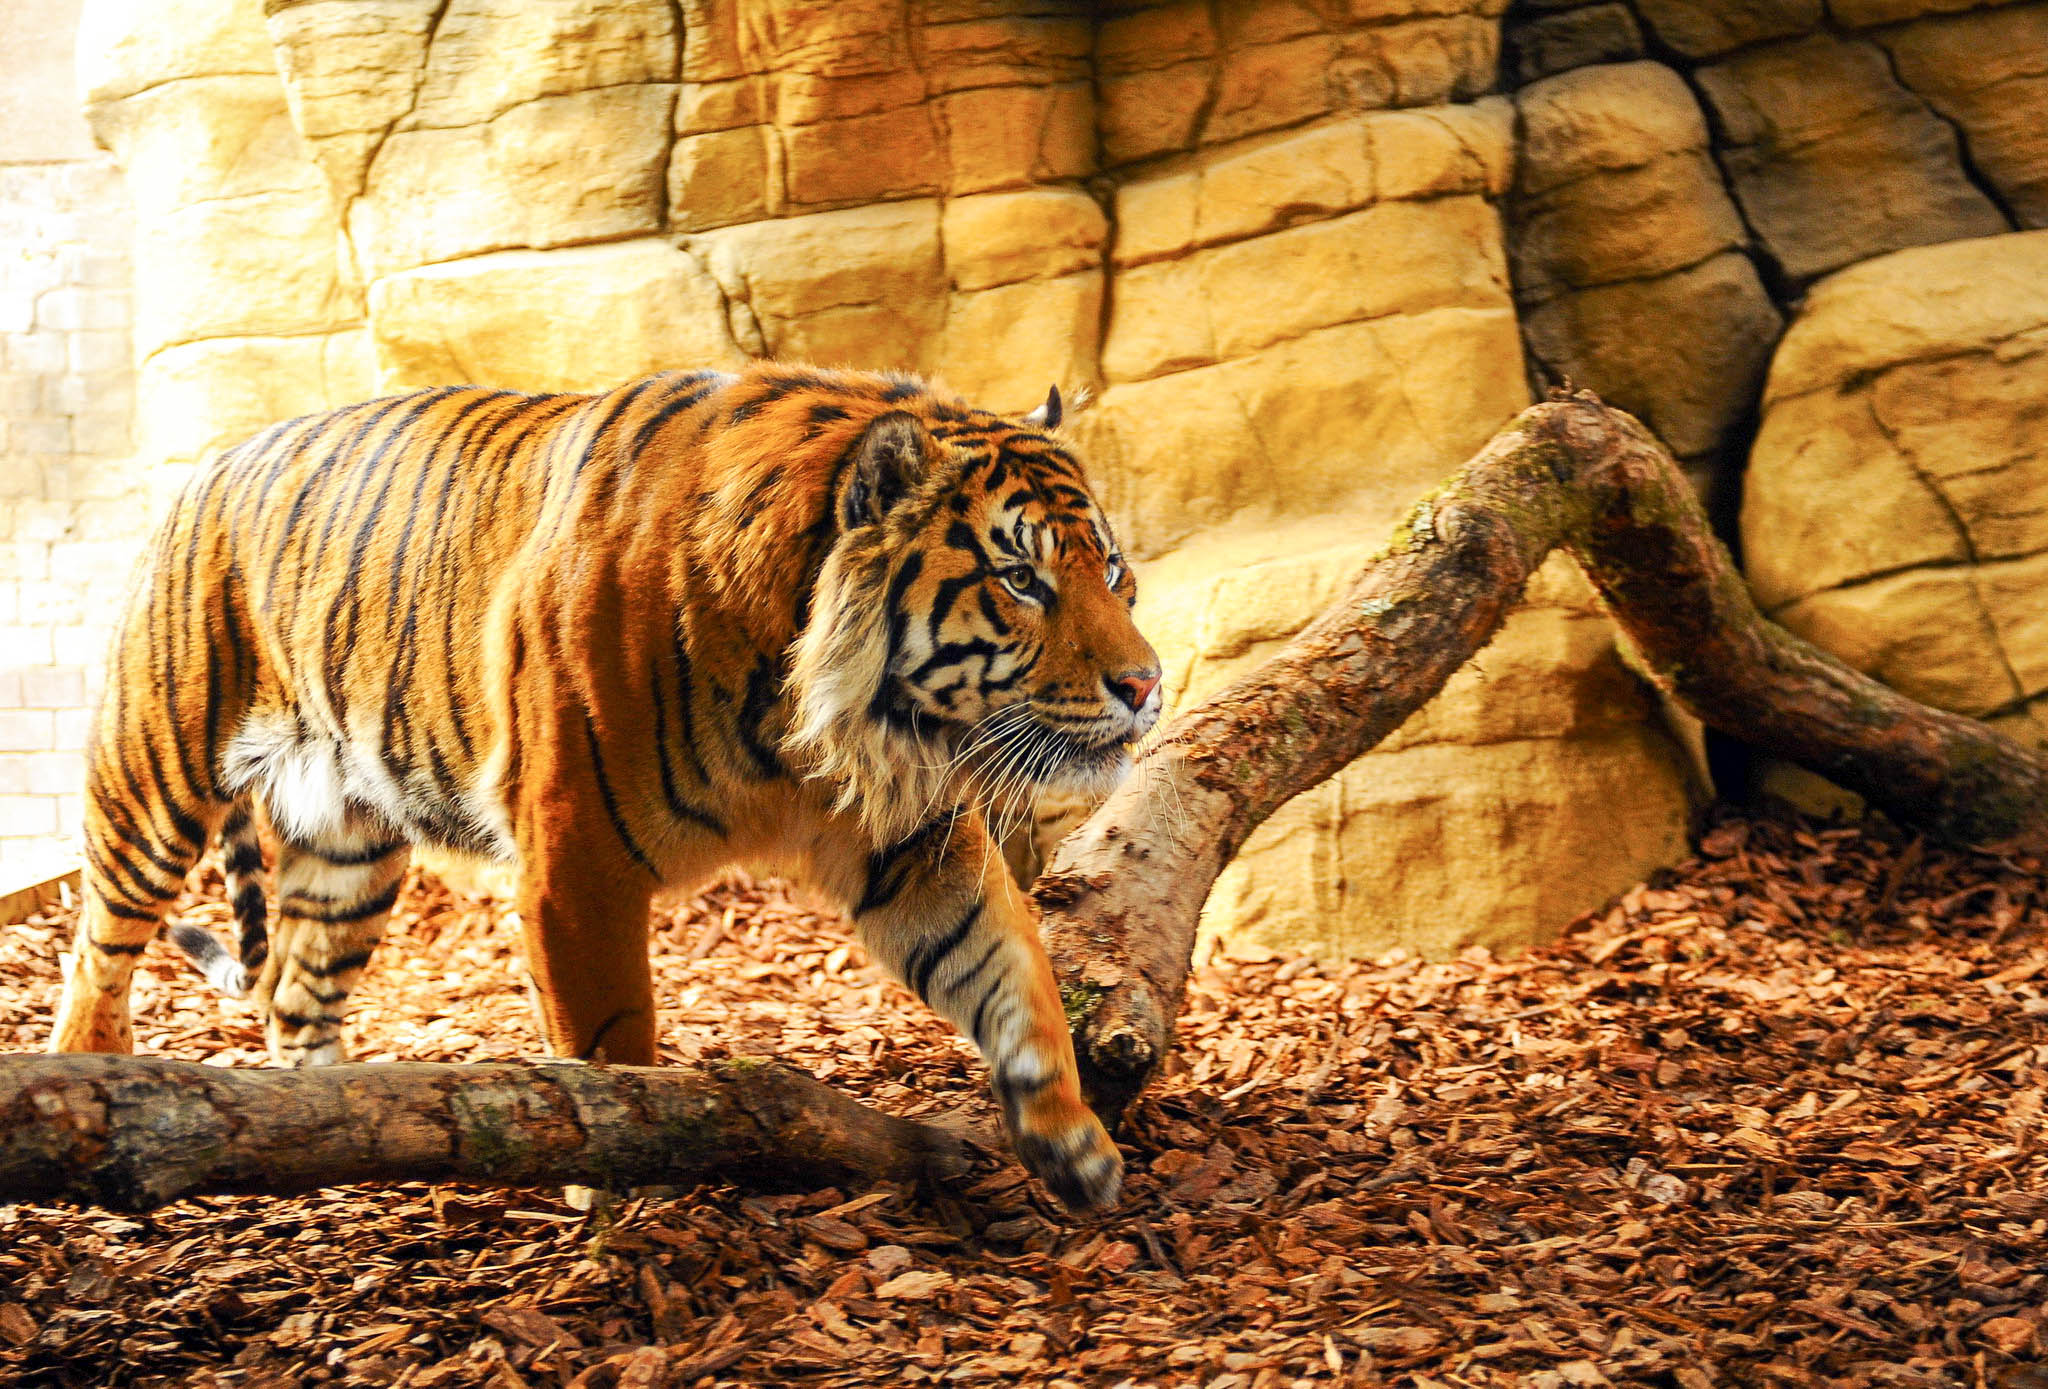 download some wallpapers,tiger,vertebrate,wildlife,bengal tiger,terrestrial animal